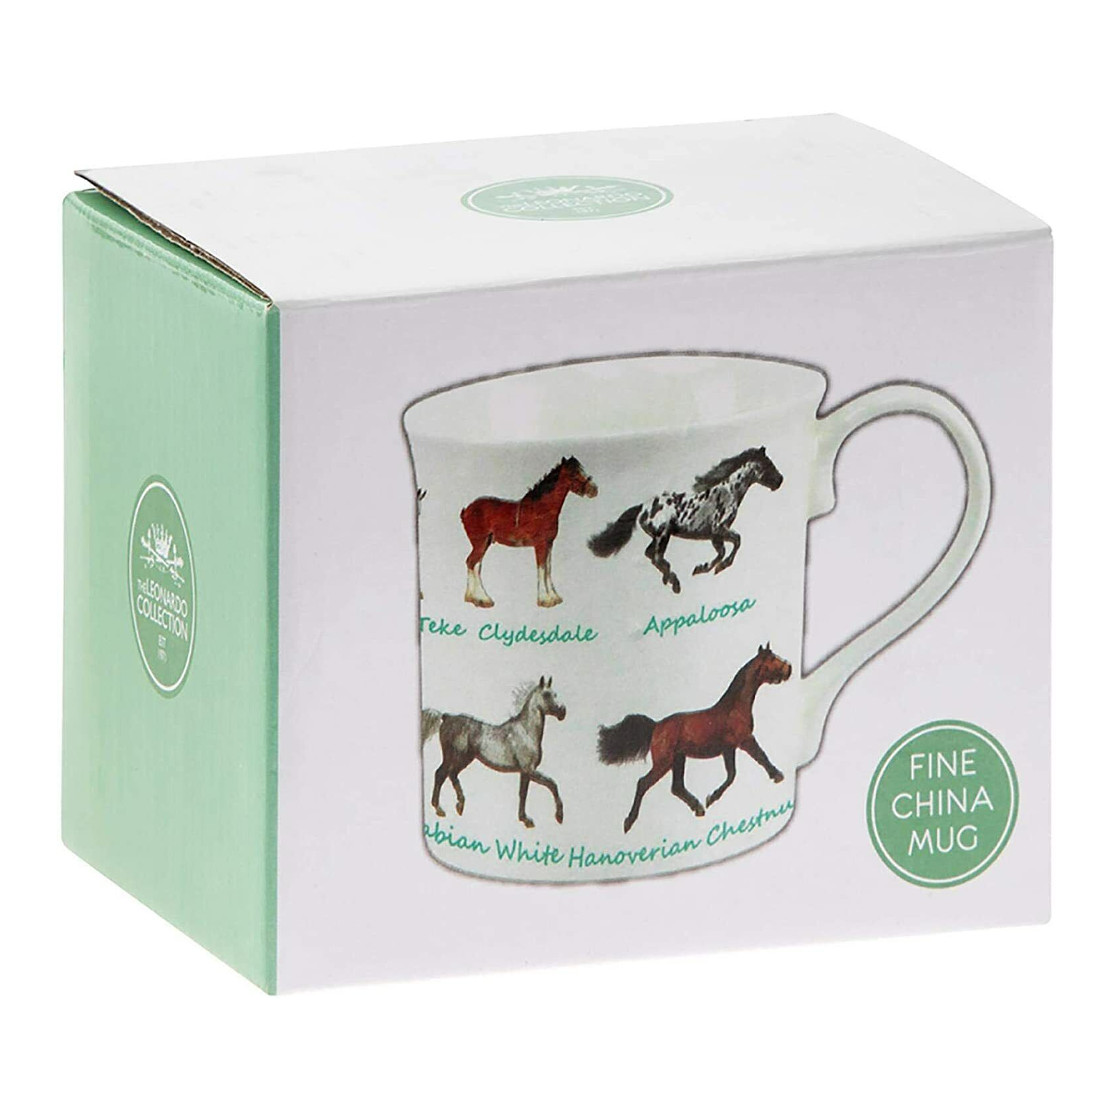 Leonardo Horses Mug Gift Boxed